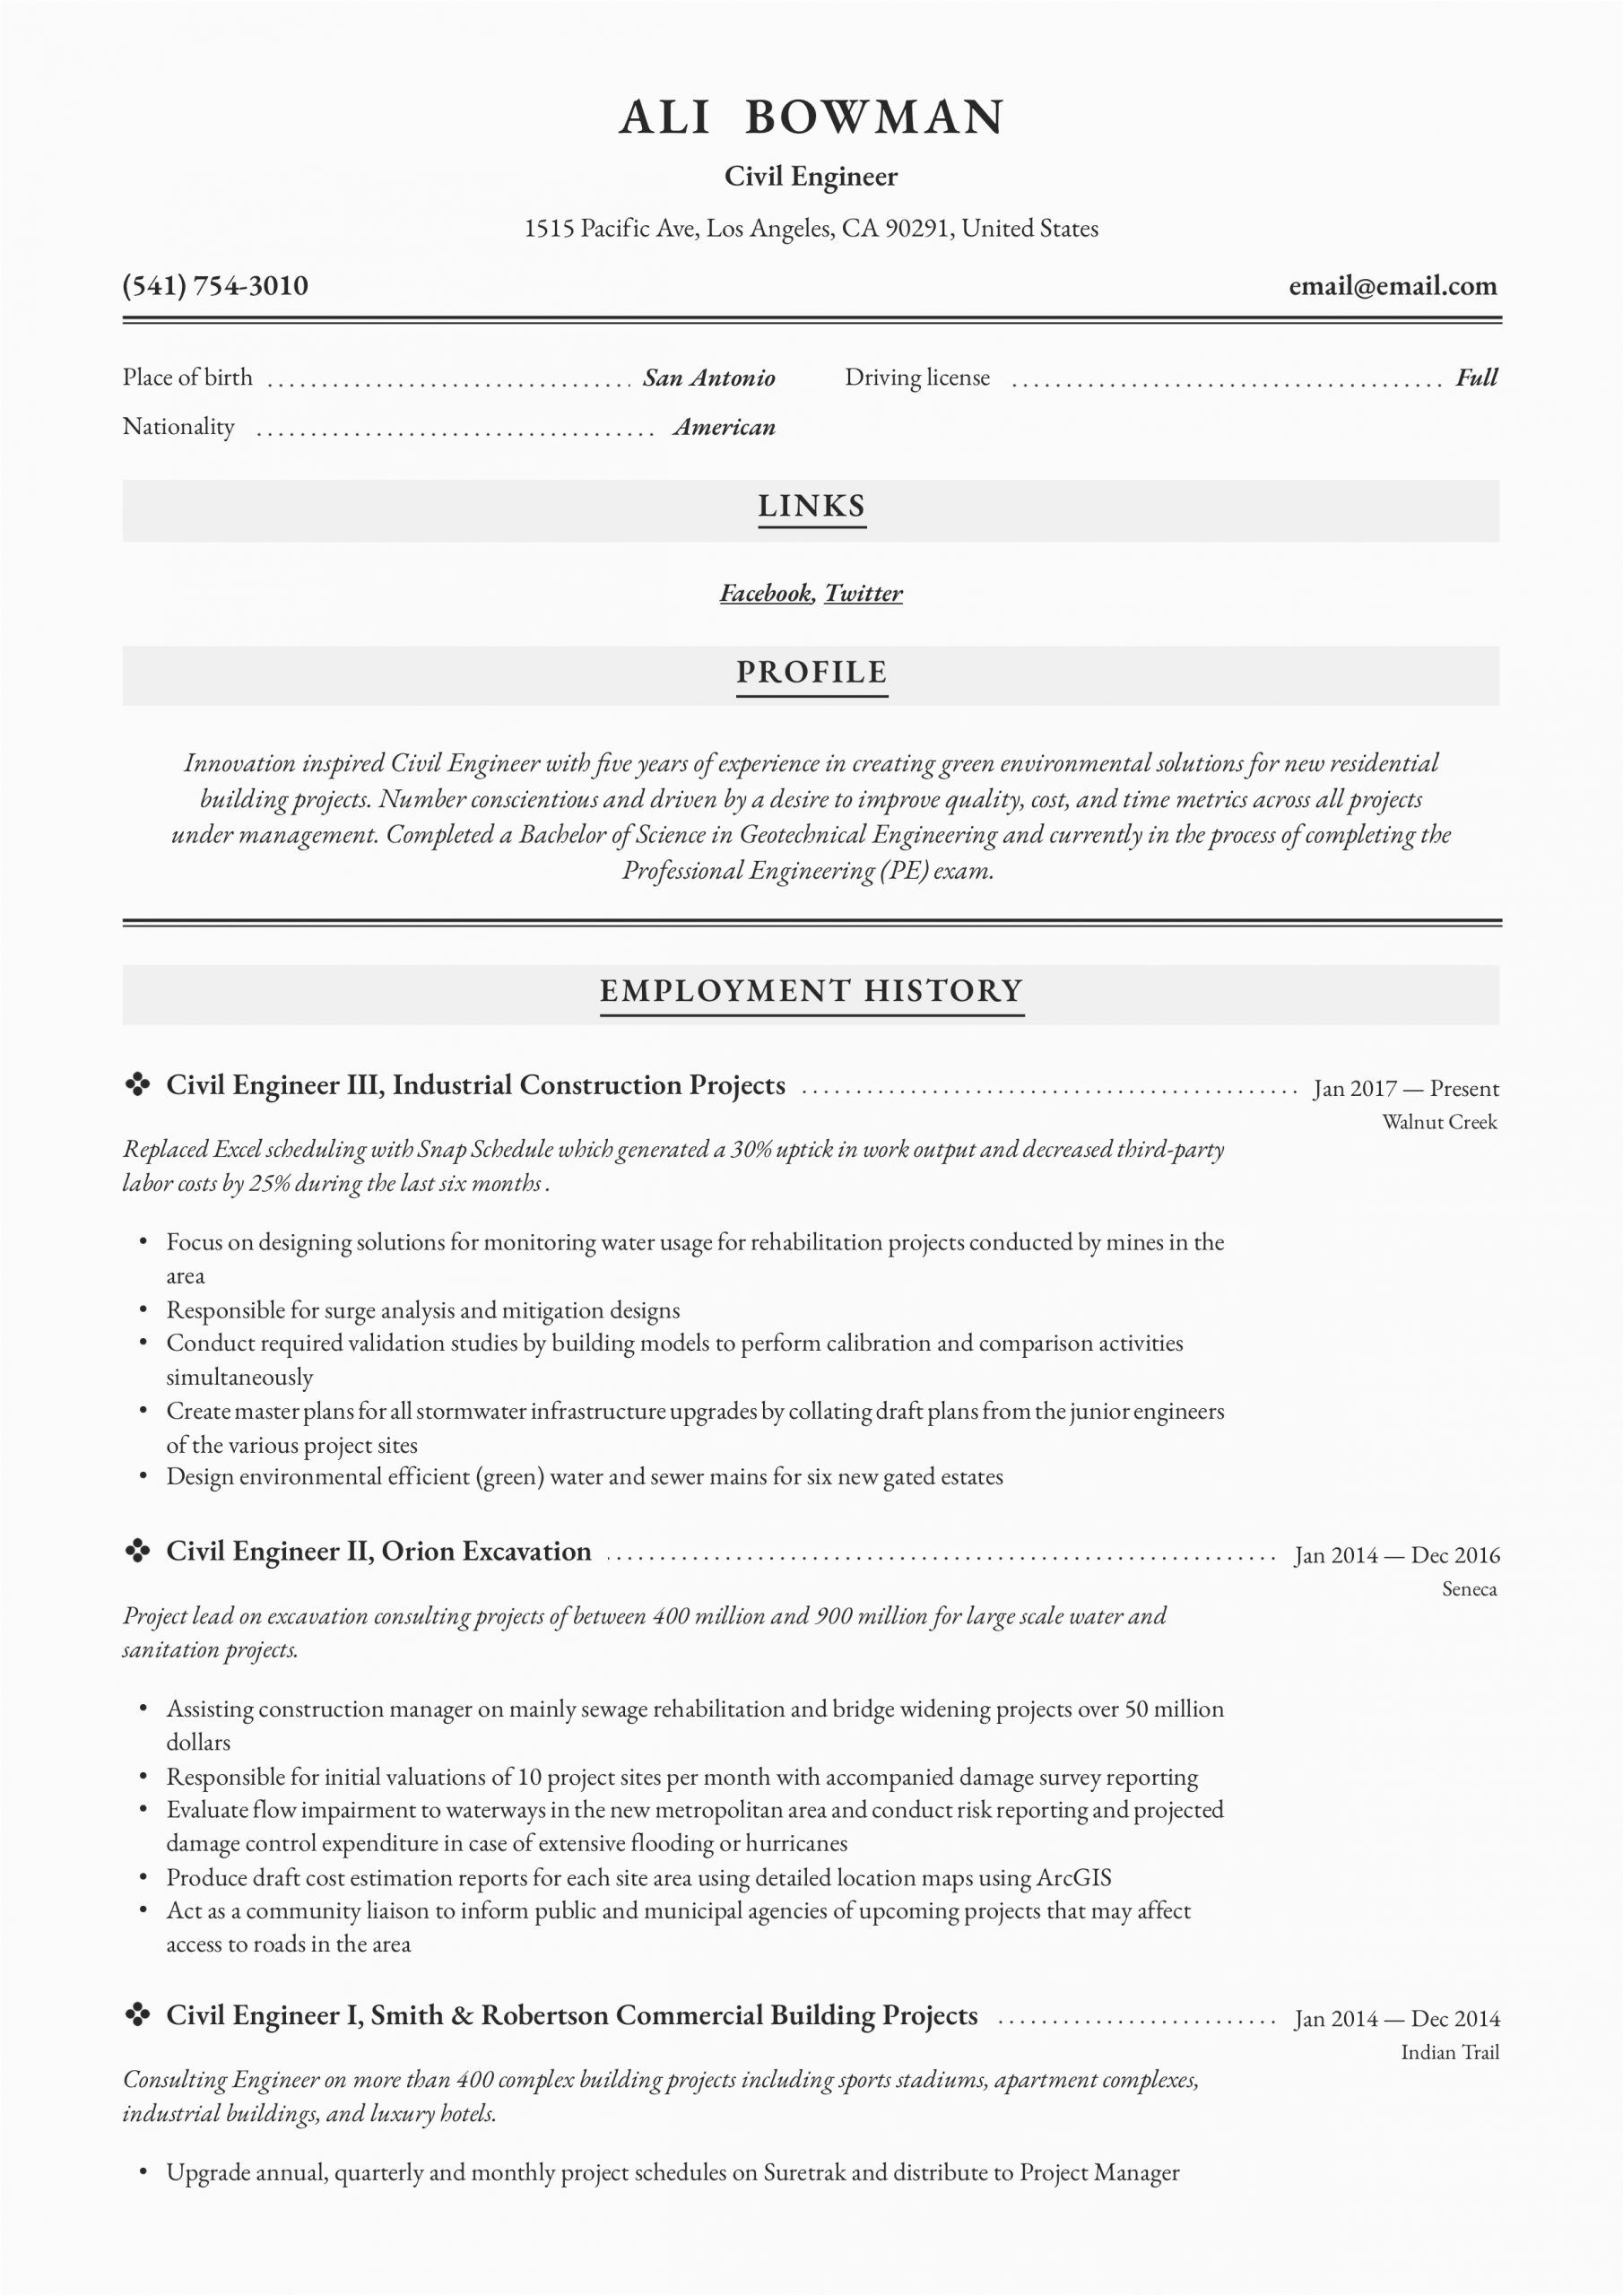 Sample Resume for Experienced Civil Engineer In India Civil Engineer Resume & Writing Guide